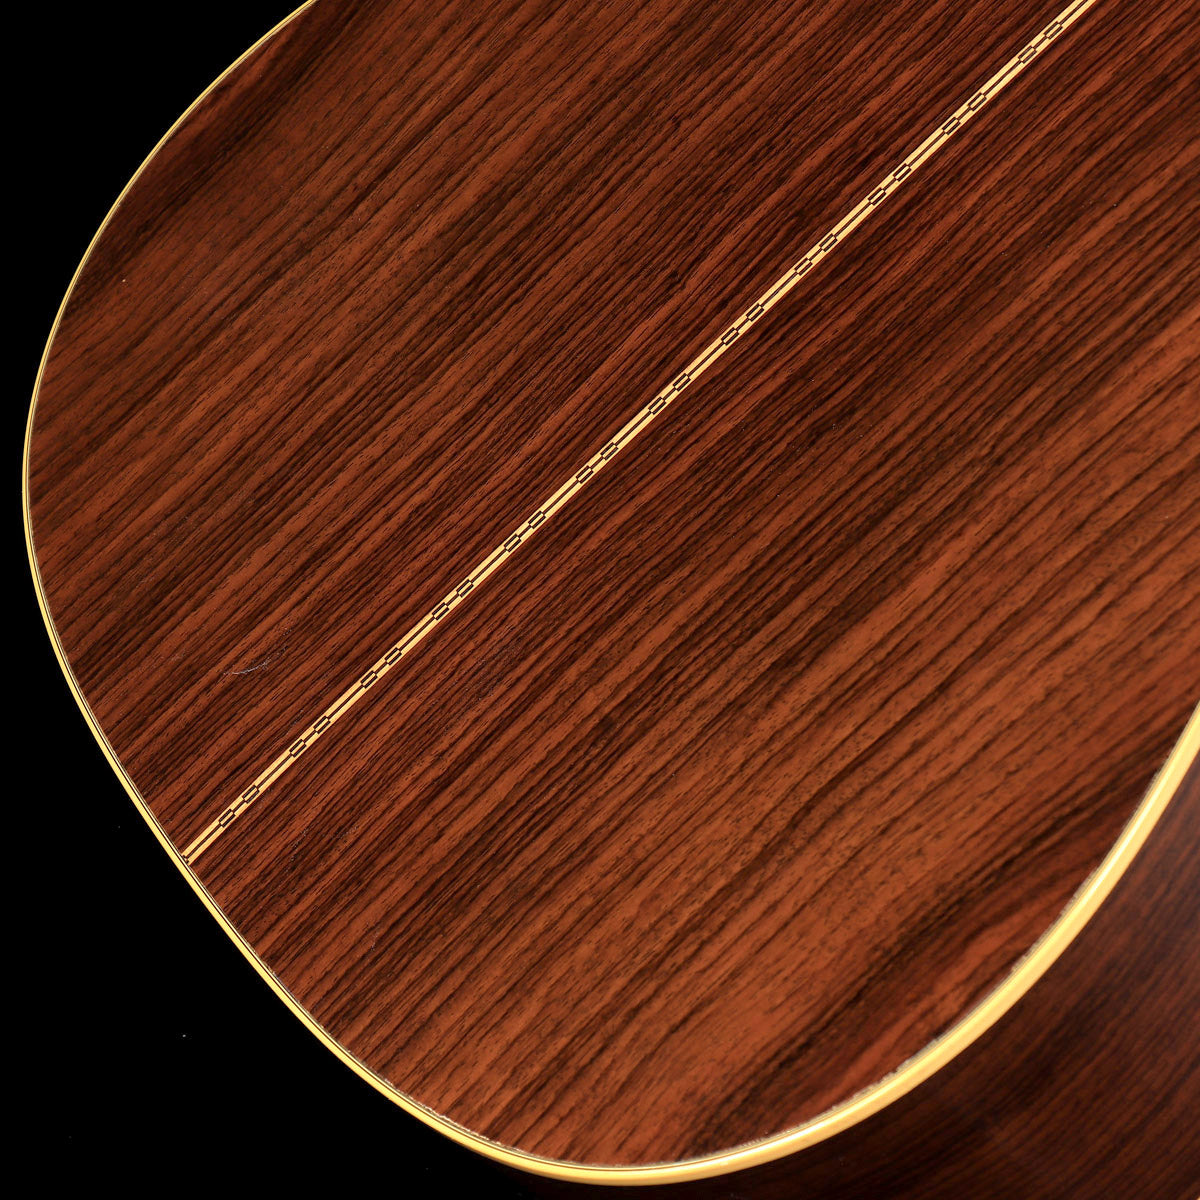 [SN 2373215] USED Martin / D-28 Standard [2020] Martin Martin Acoustic Guitar Acoustic Guitar [08]